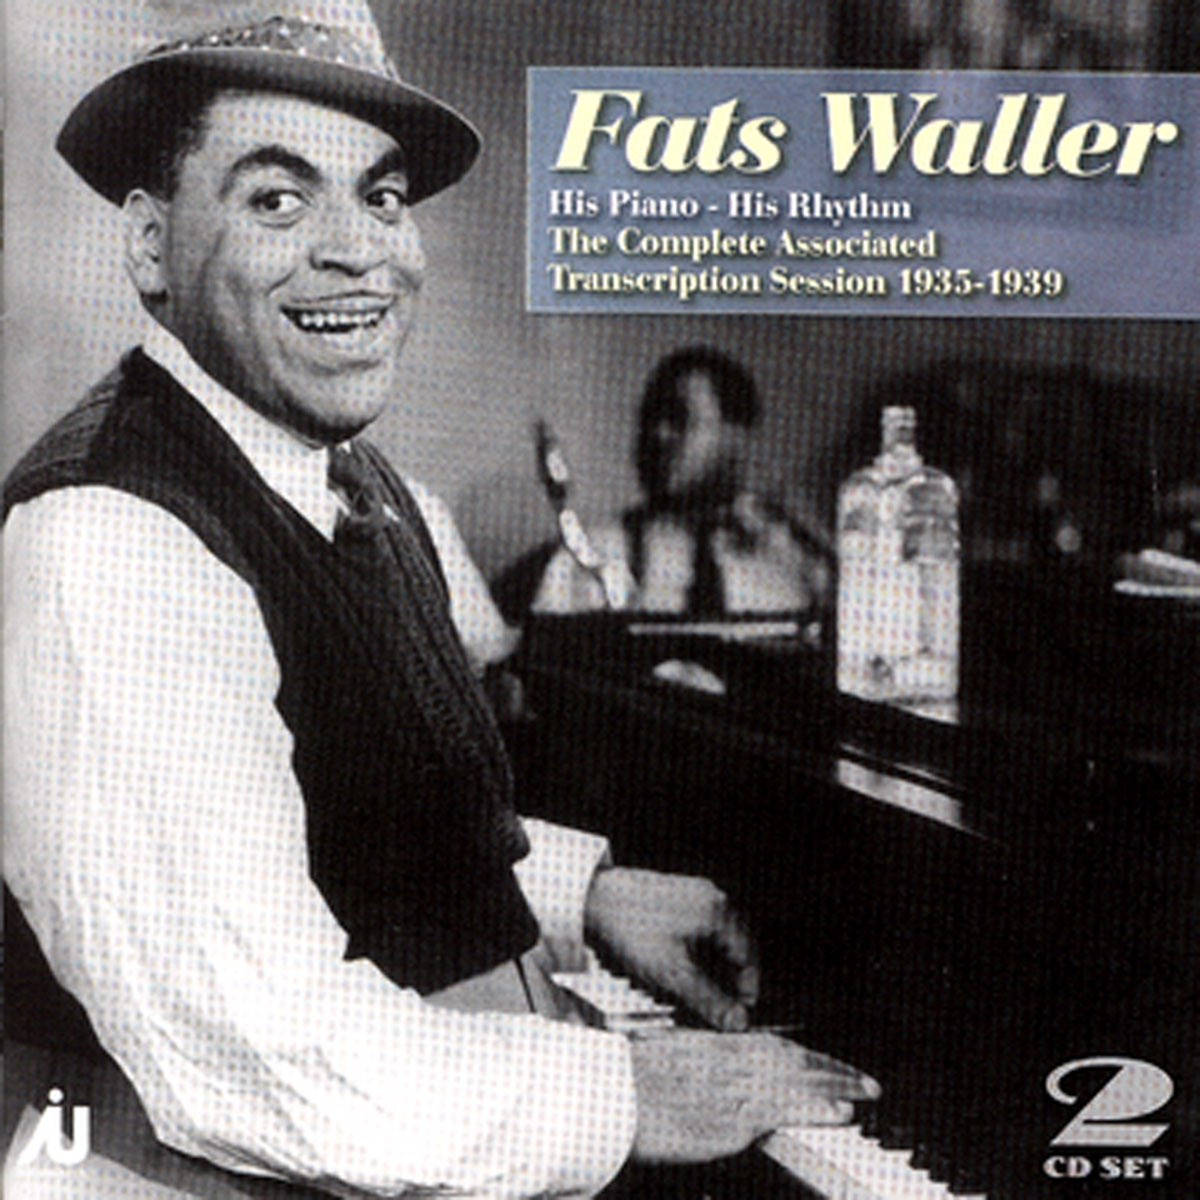 Fats Waller His Piano His Rhythm Album Cover Wallpaper